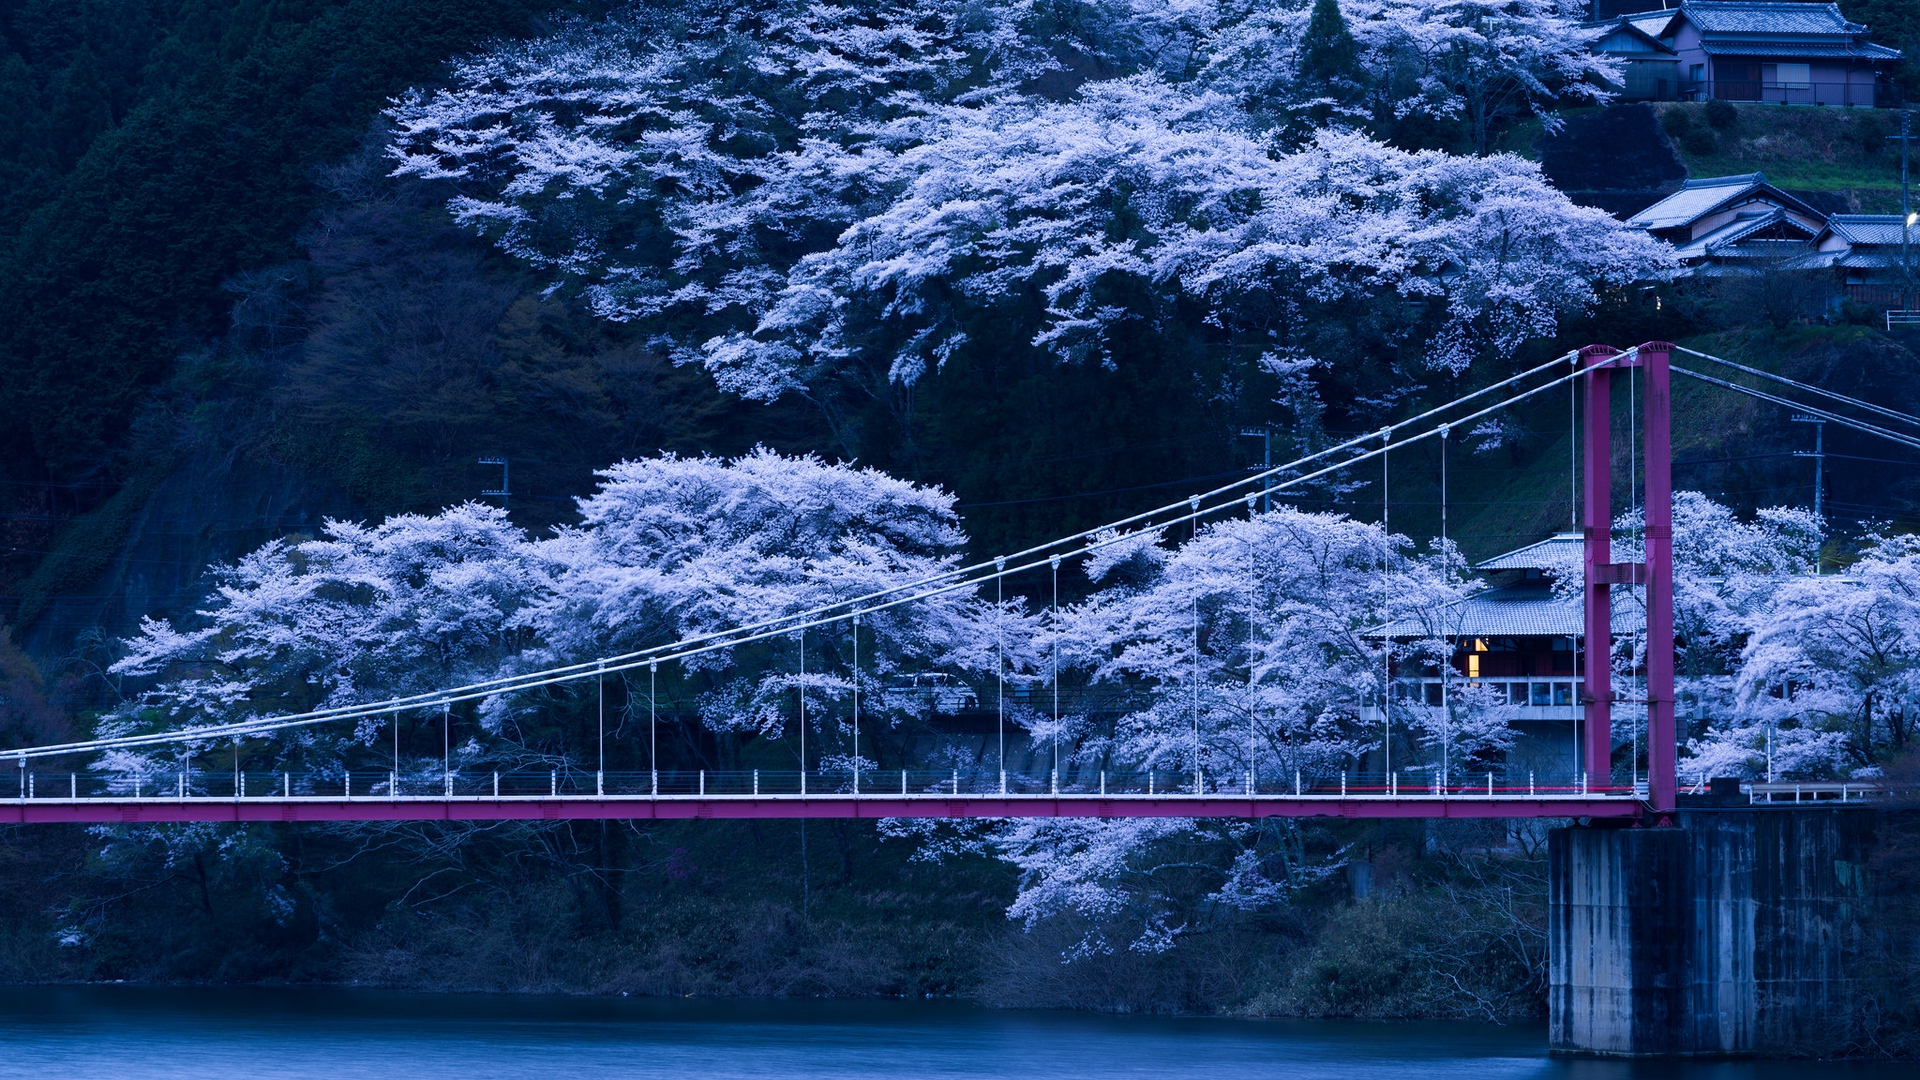 Sakura Night Wallpapers Wallpaper Cave